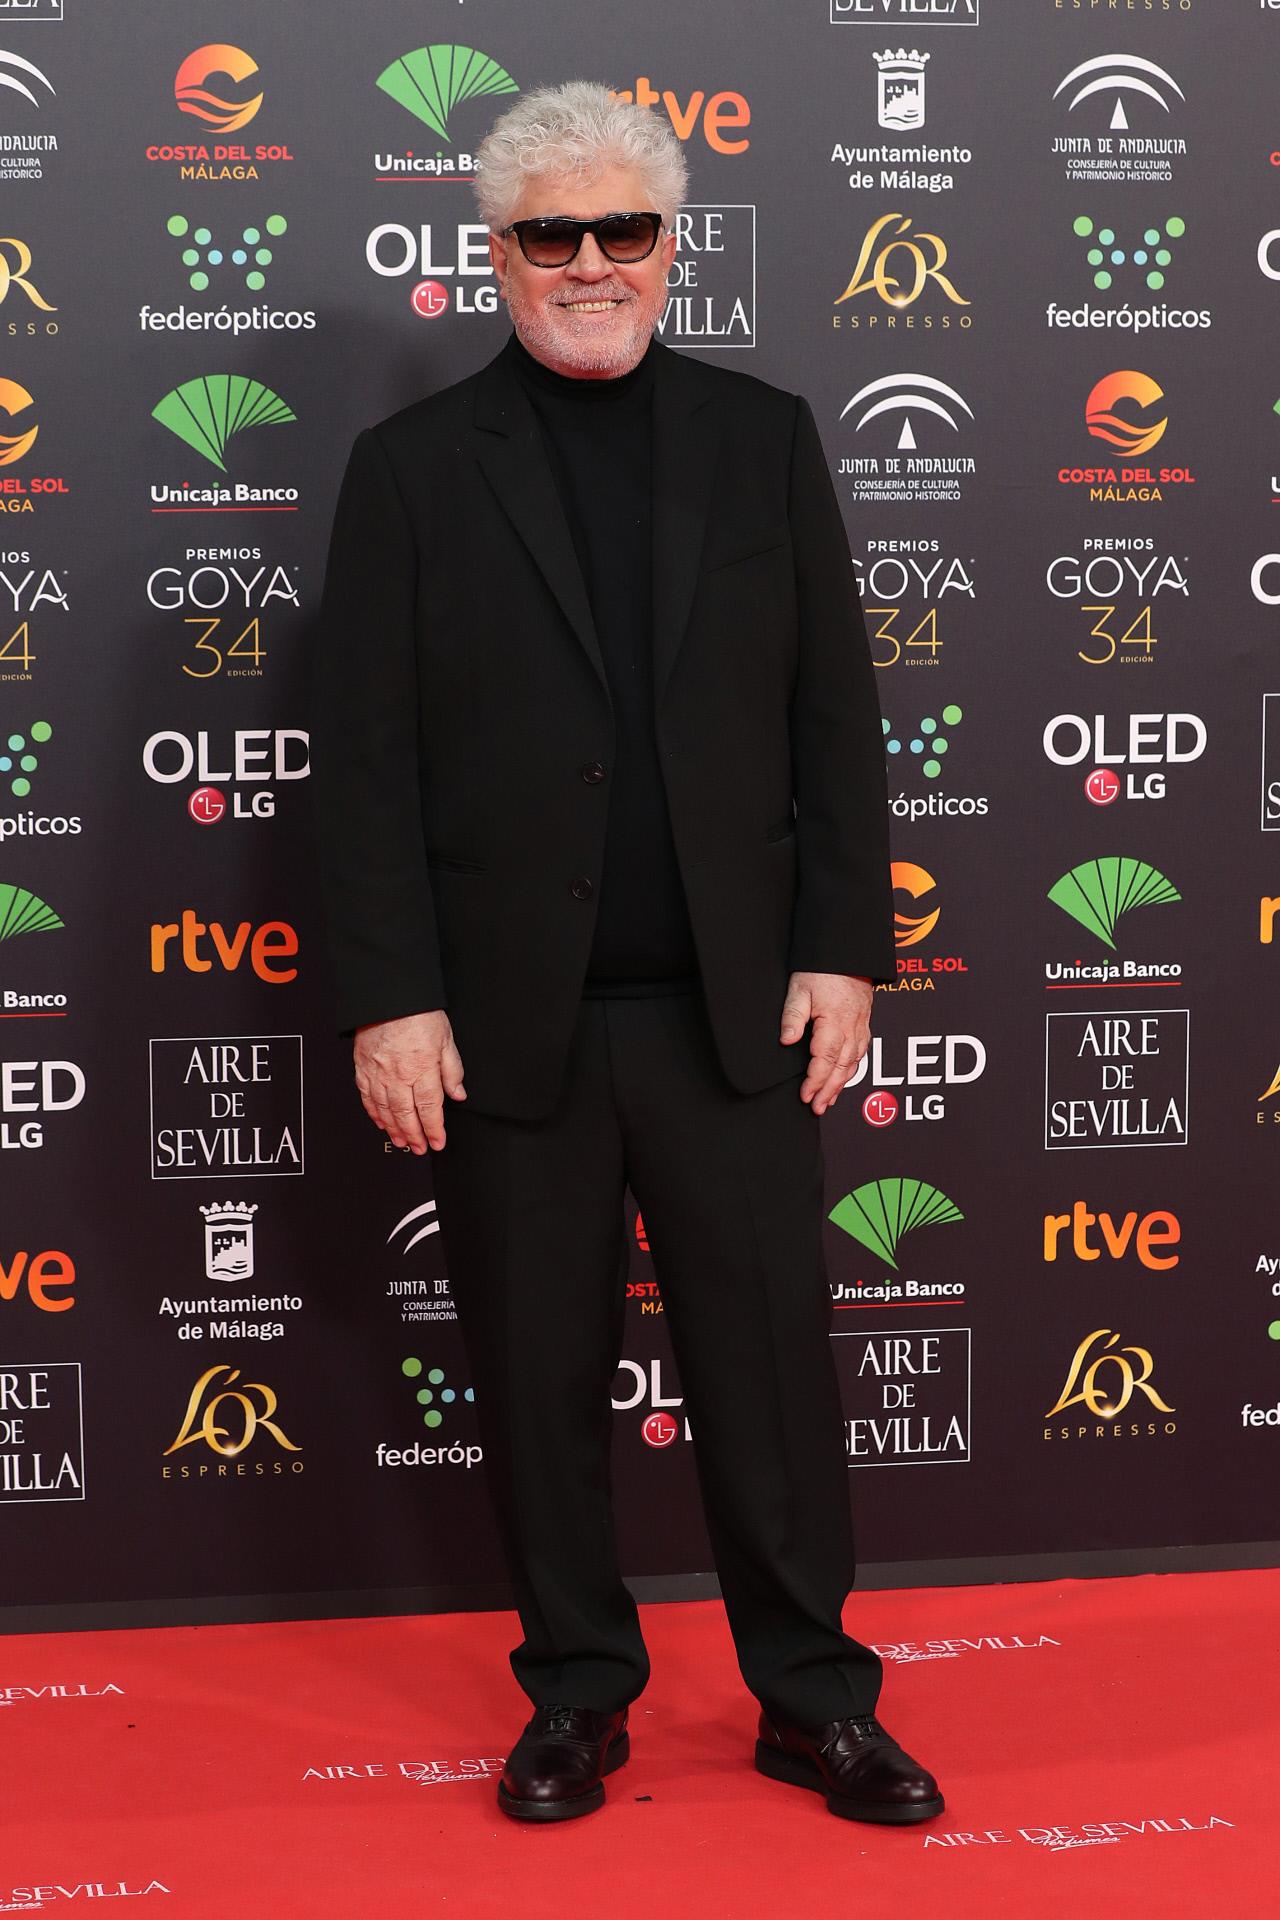 Premios Goya 2020, Pedro Almodóvar